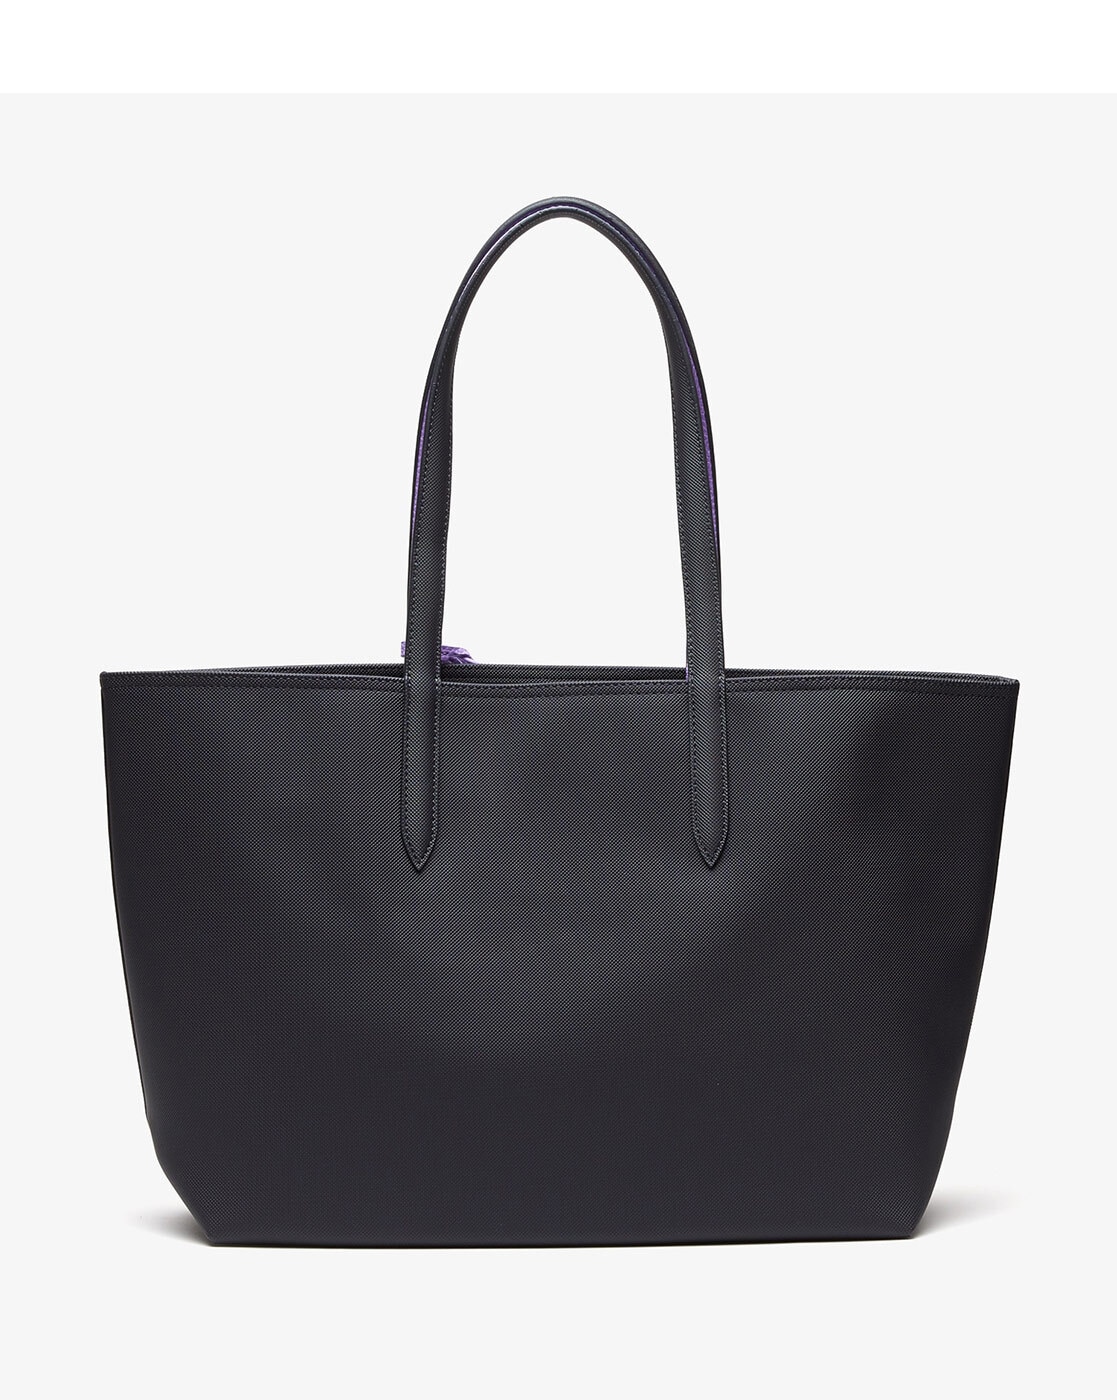 Lacoste Women's Chantaco Gusseted Piqué Leather Tote Bag | Bags, Tote bag  leather, Leather handbags tote